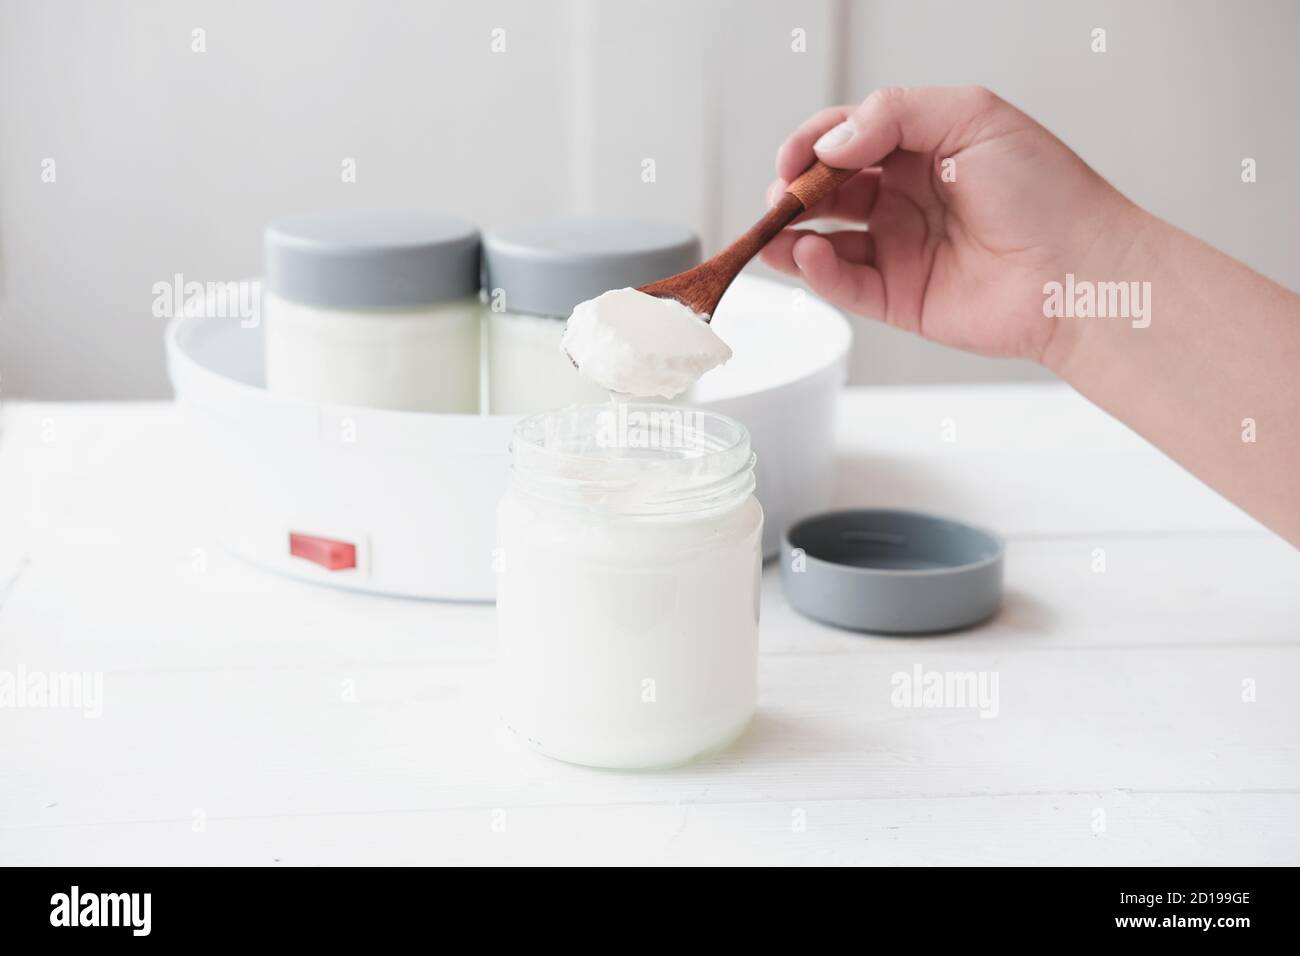 baby's hand holding a spoon with homemade organic yogurt. jars in yogurt maker. automatic yogurt machine to make fermented milk product at home. yogurt or kefir making during quarantine concept.  Stock Photo